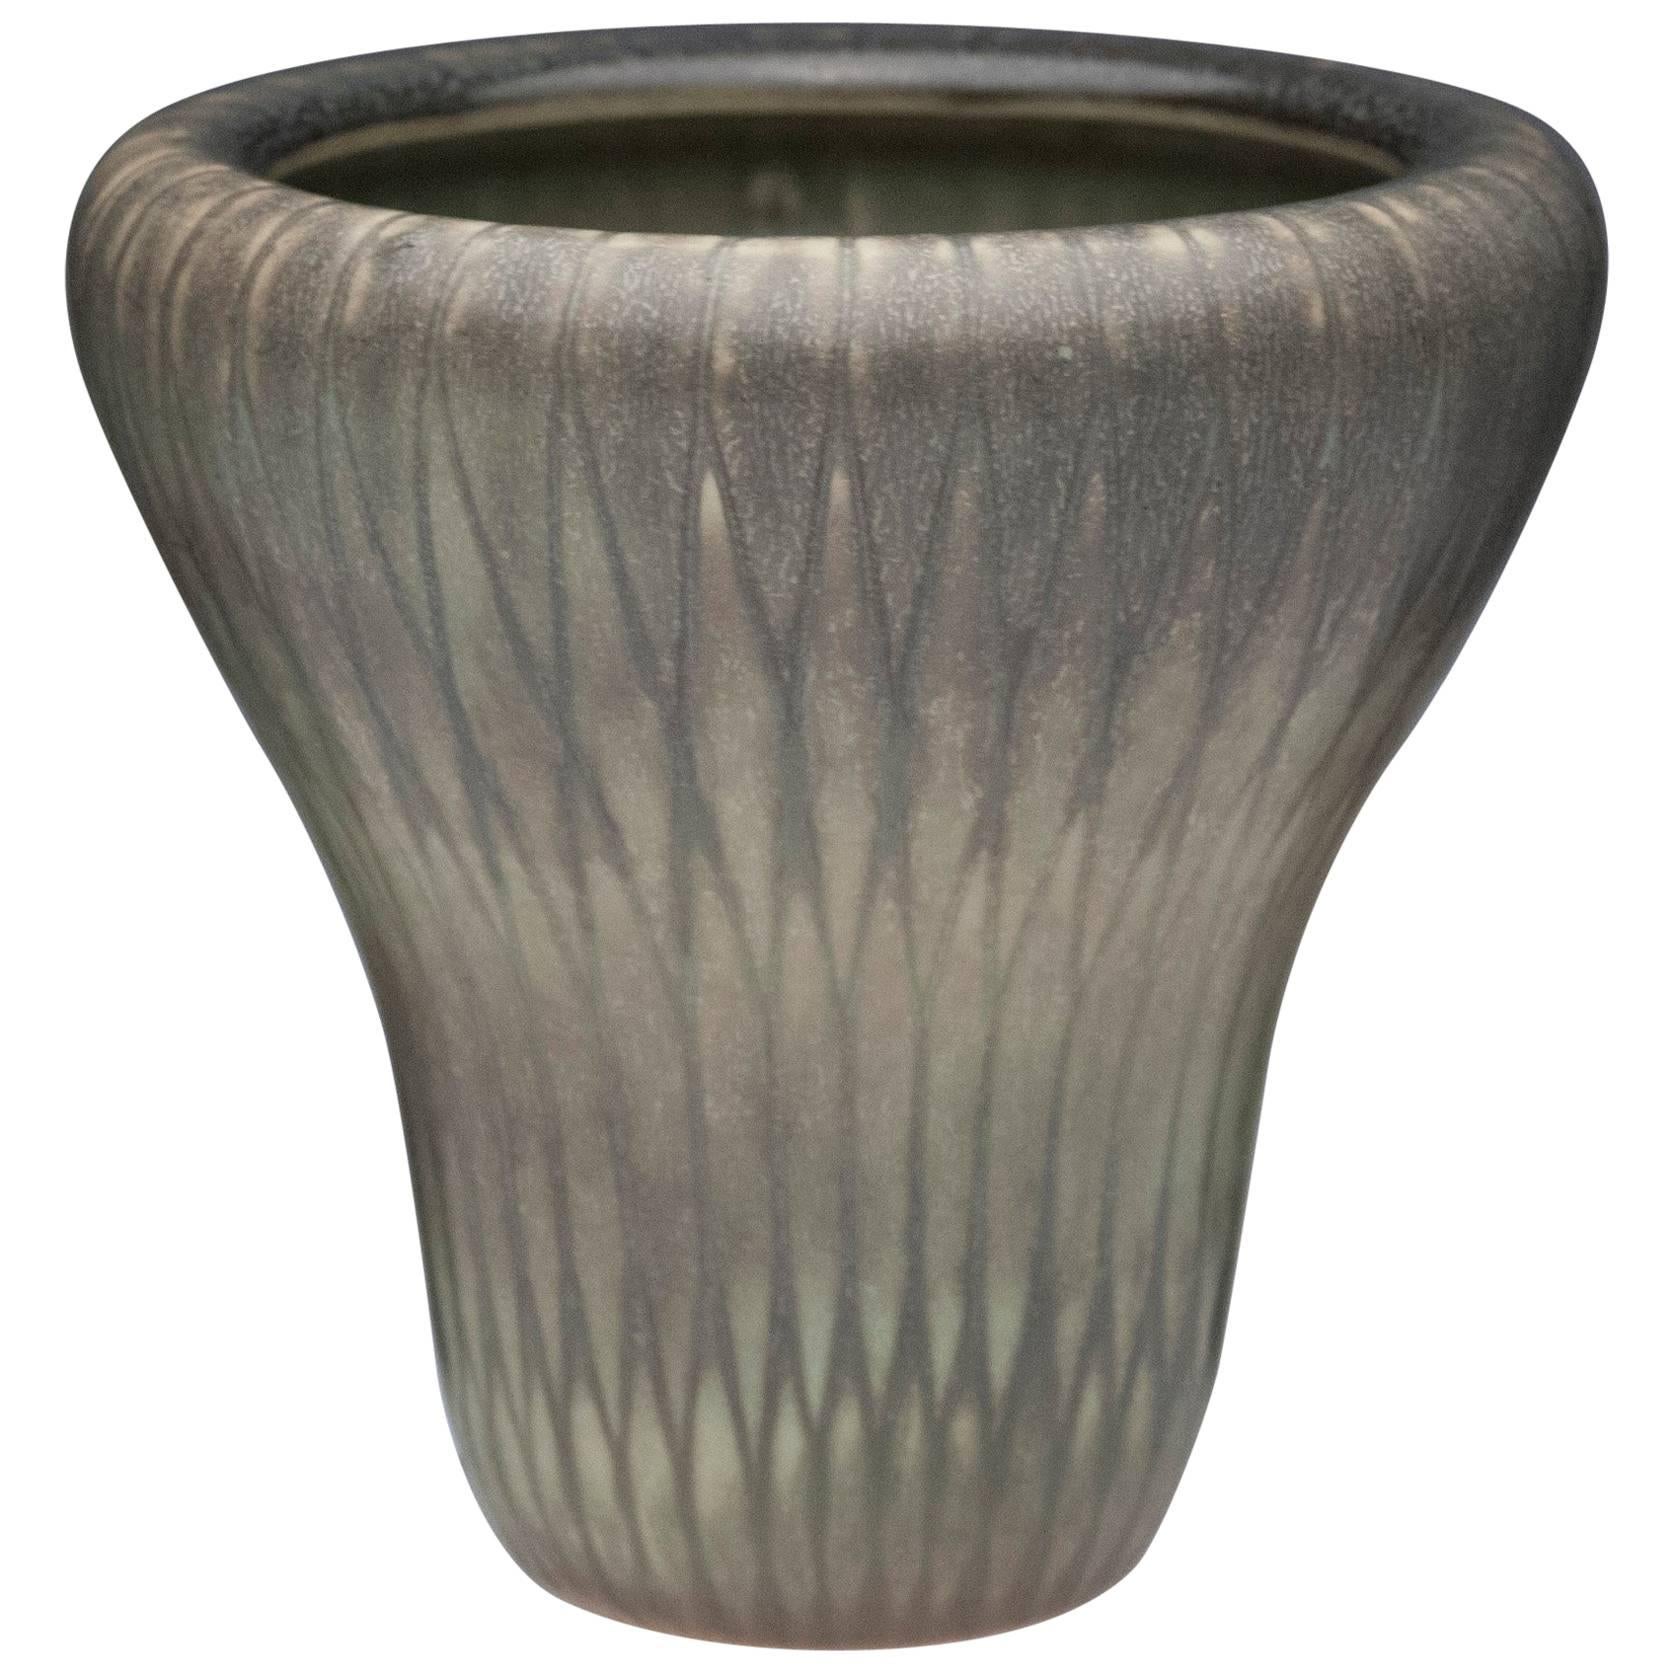 Carl Harry Stalhan Ceramic Vase Rorstrand Sweden